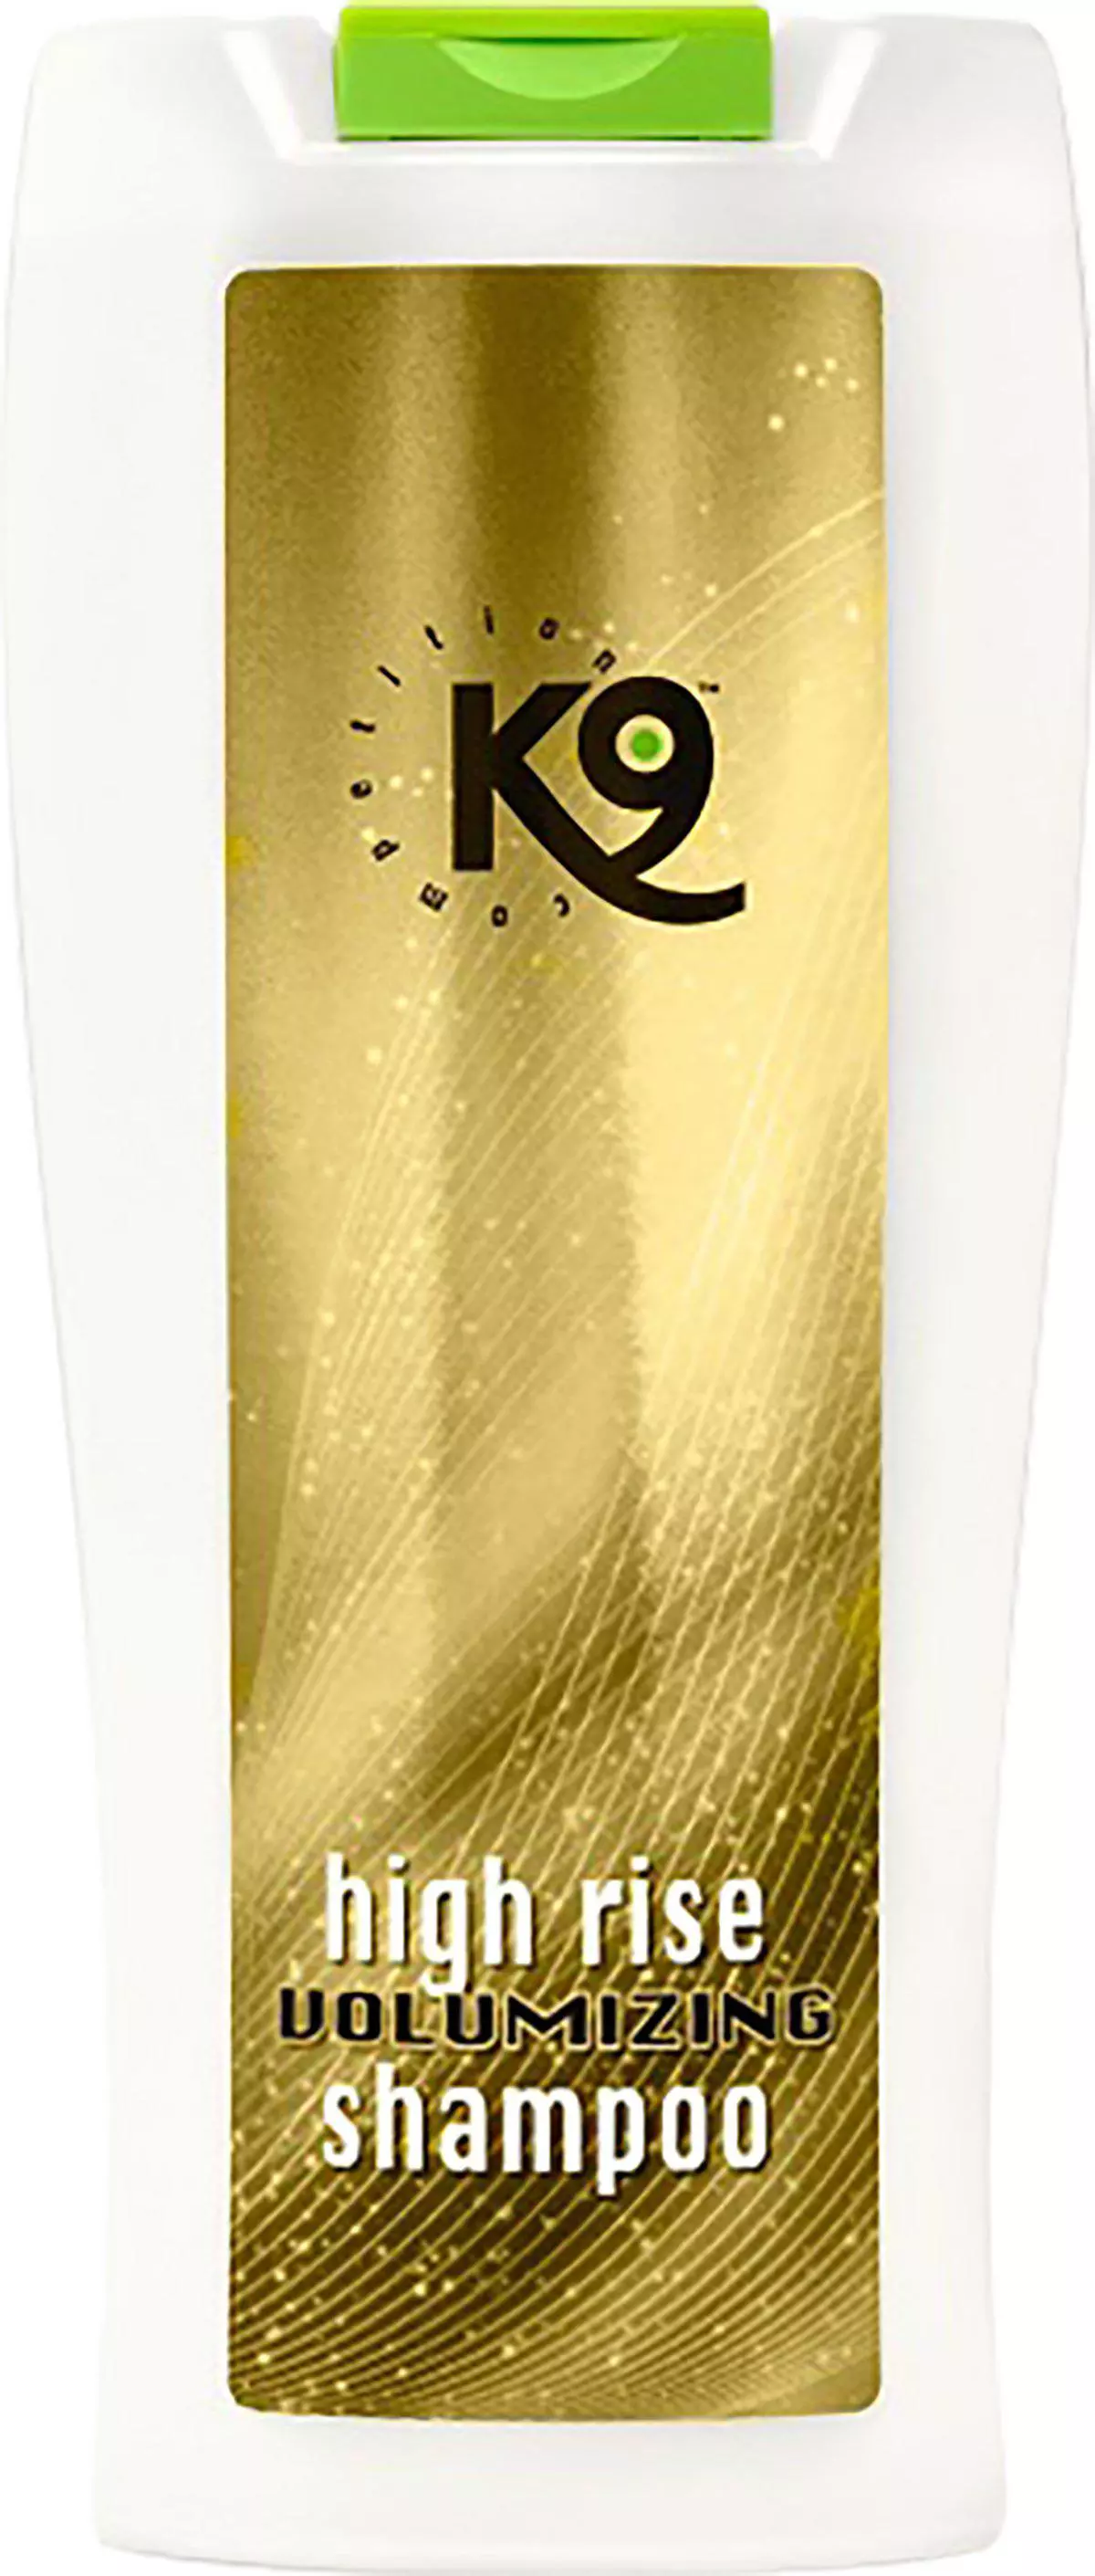 K9 Shampoo High Rise ,7L .0564